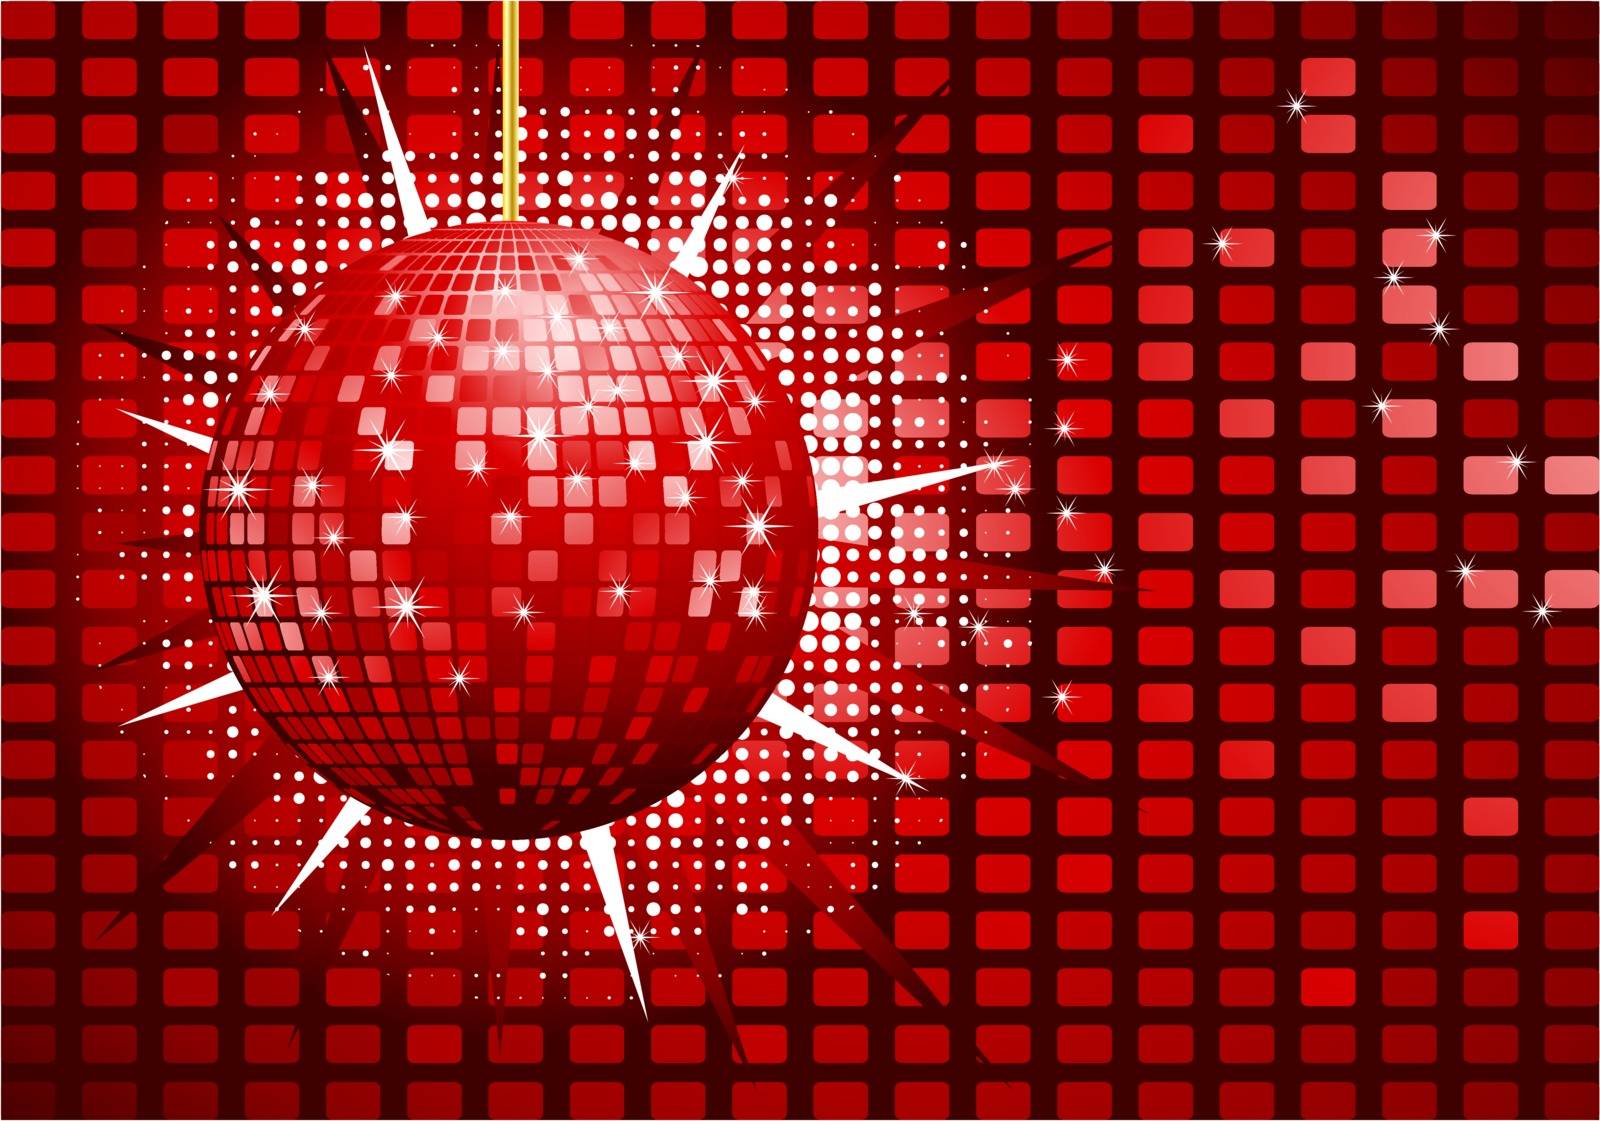 Shiny red disco ball by milinz